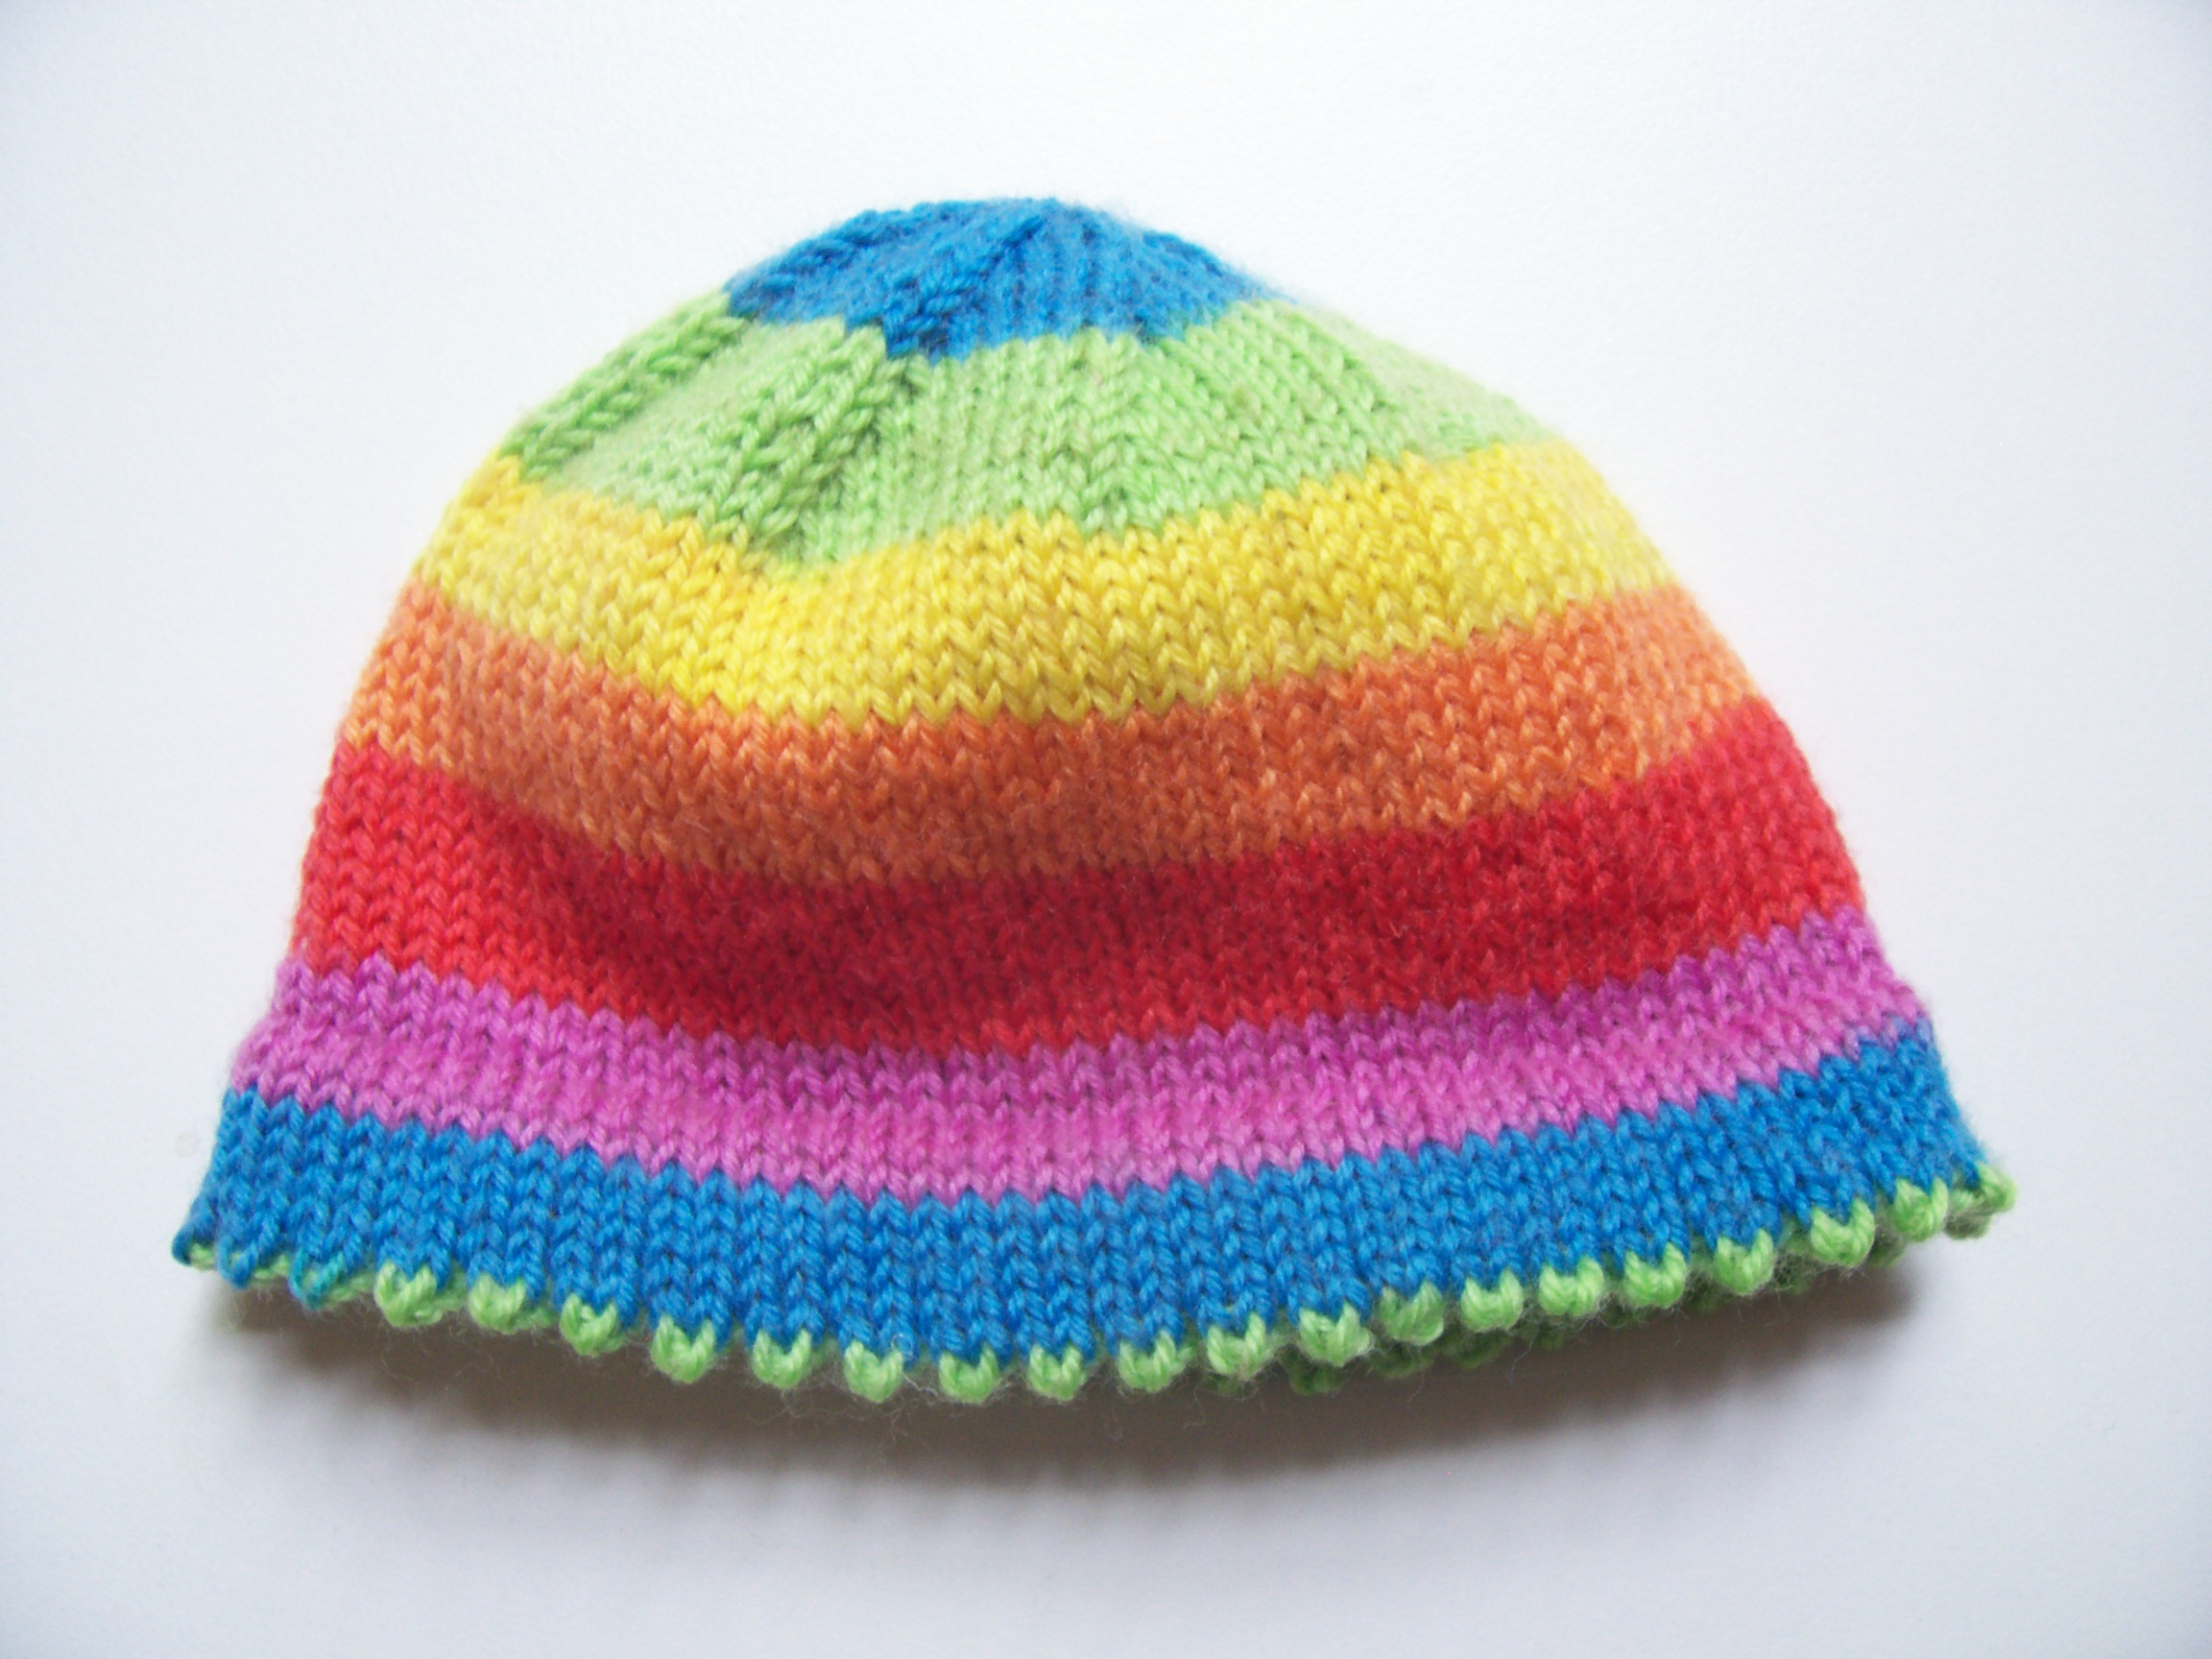 Knitted Preemie Hat Patterns Picot Hem Preemie Hat A K N I T I C A